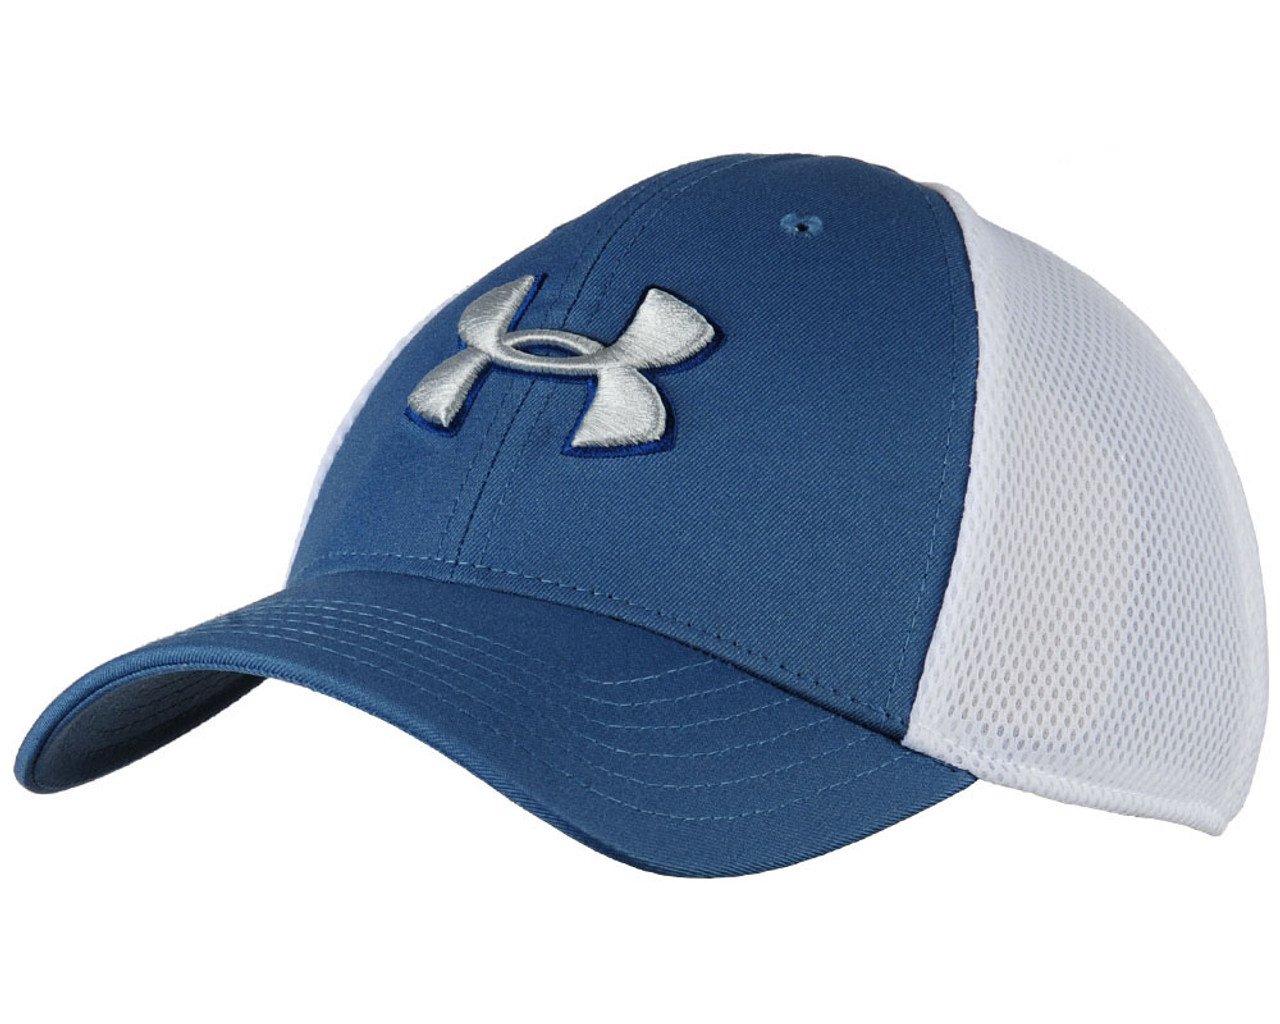 Under Armour Golf Mesh Stretch 2.0 Hat - Blue/White (983) | Baseball Caps